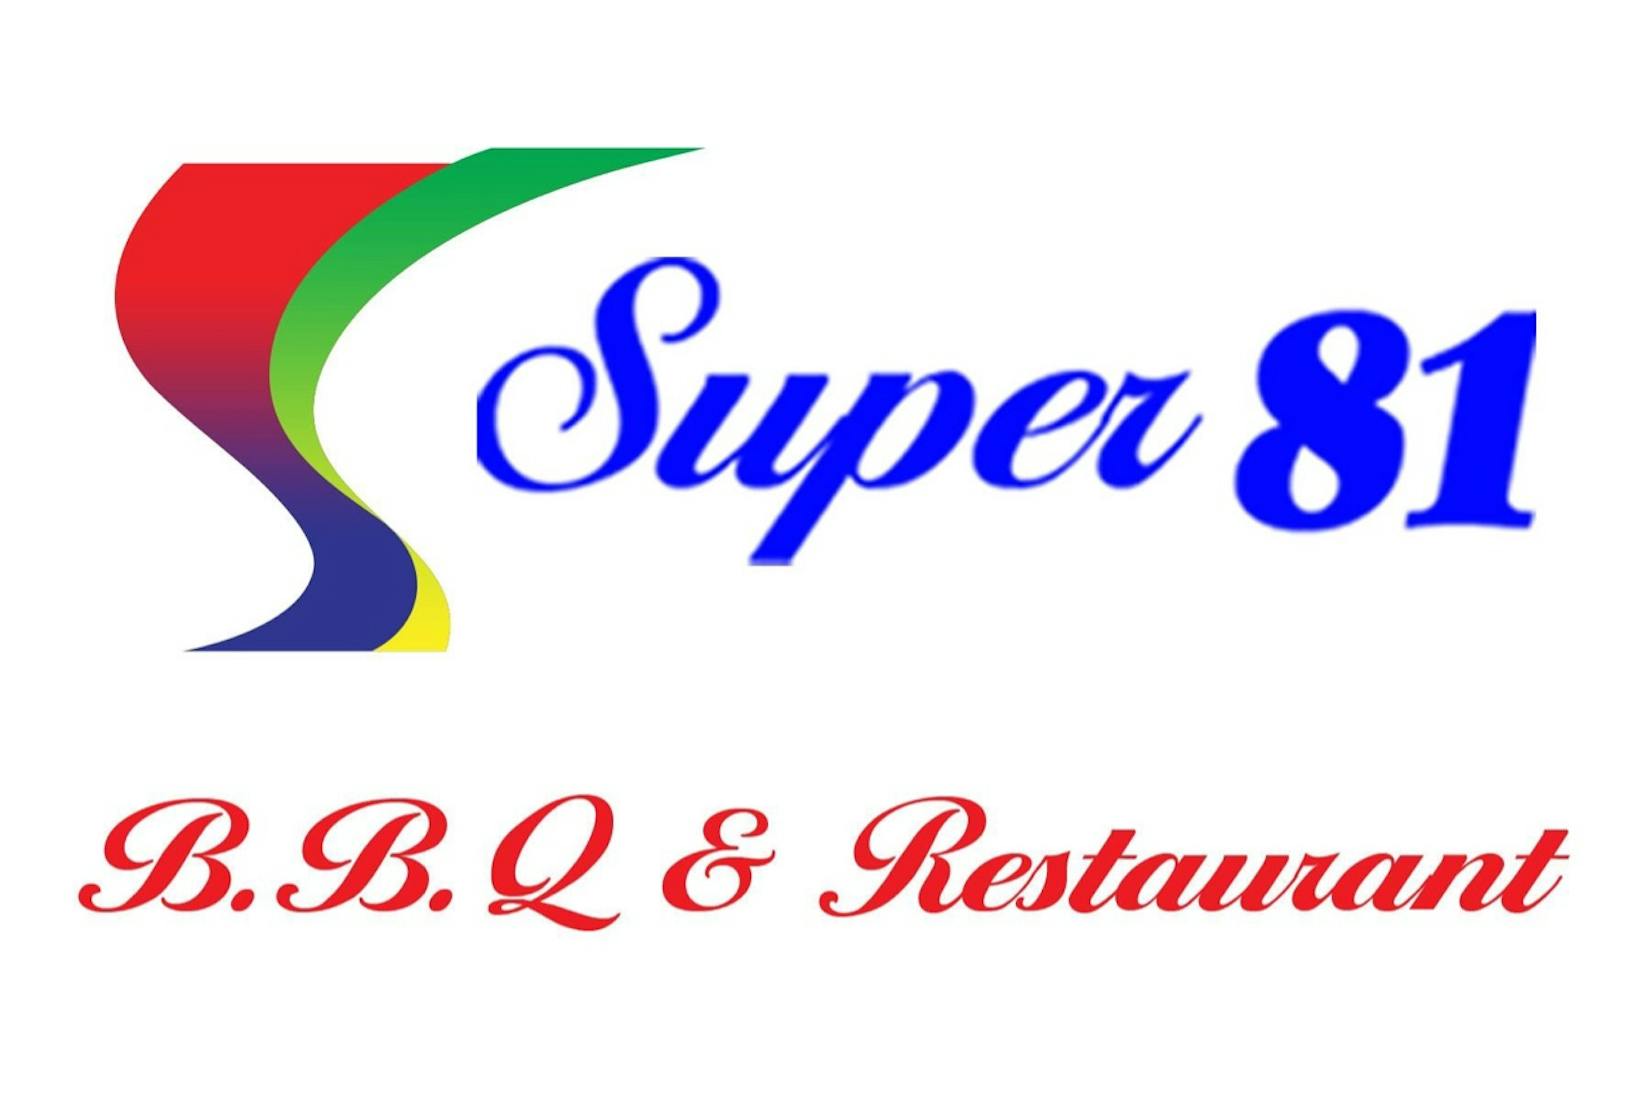 Super 81 BBQ & Restaurant | yathar